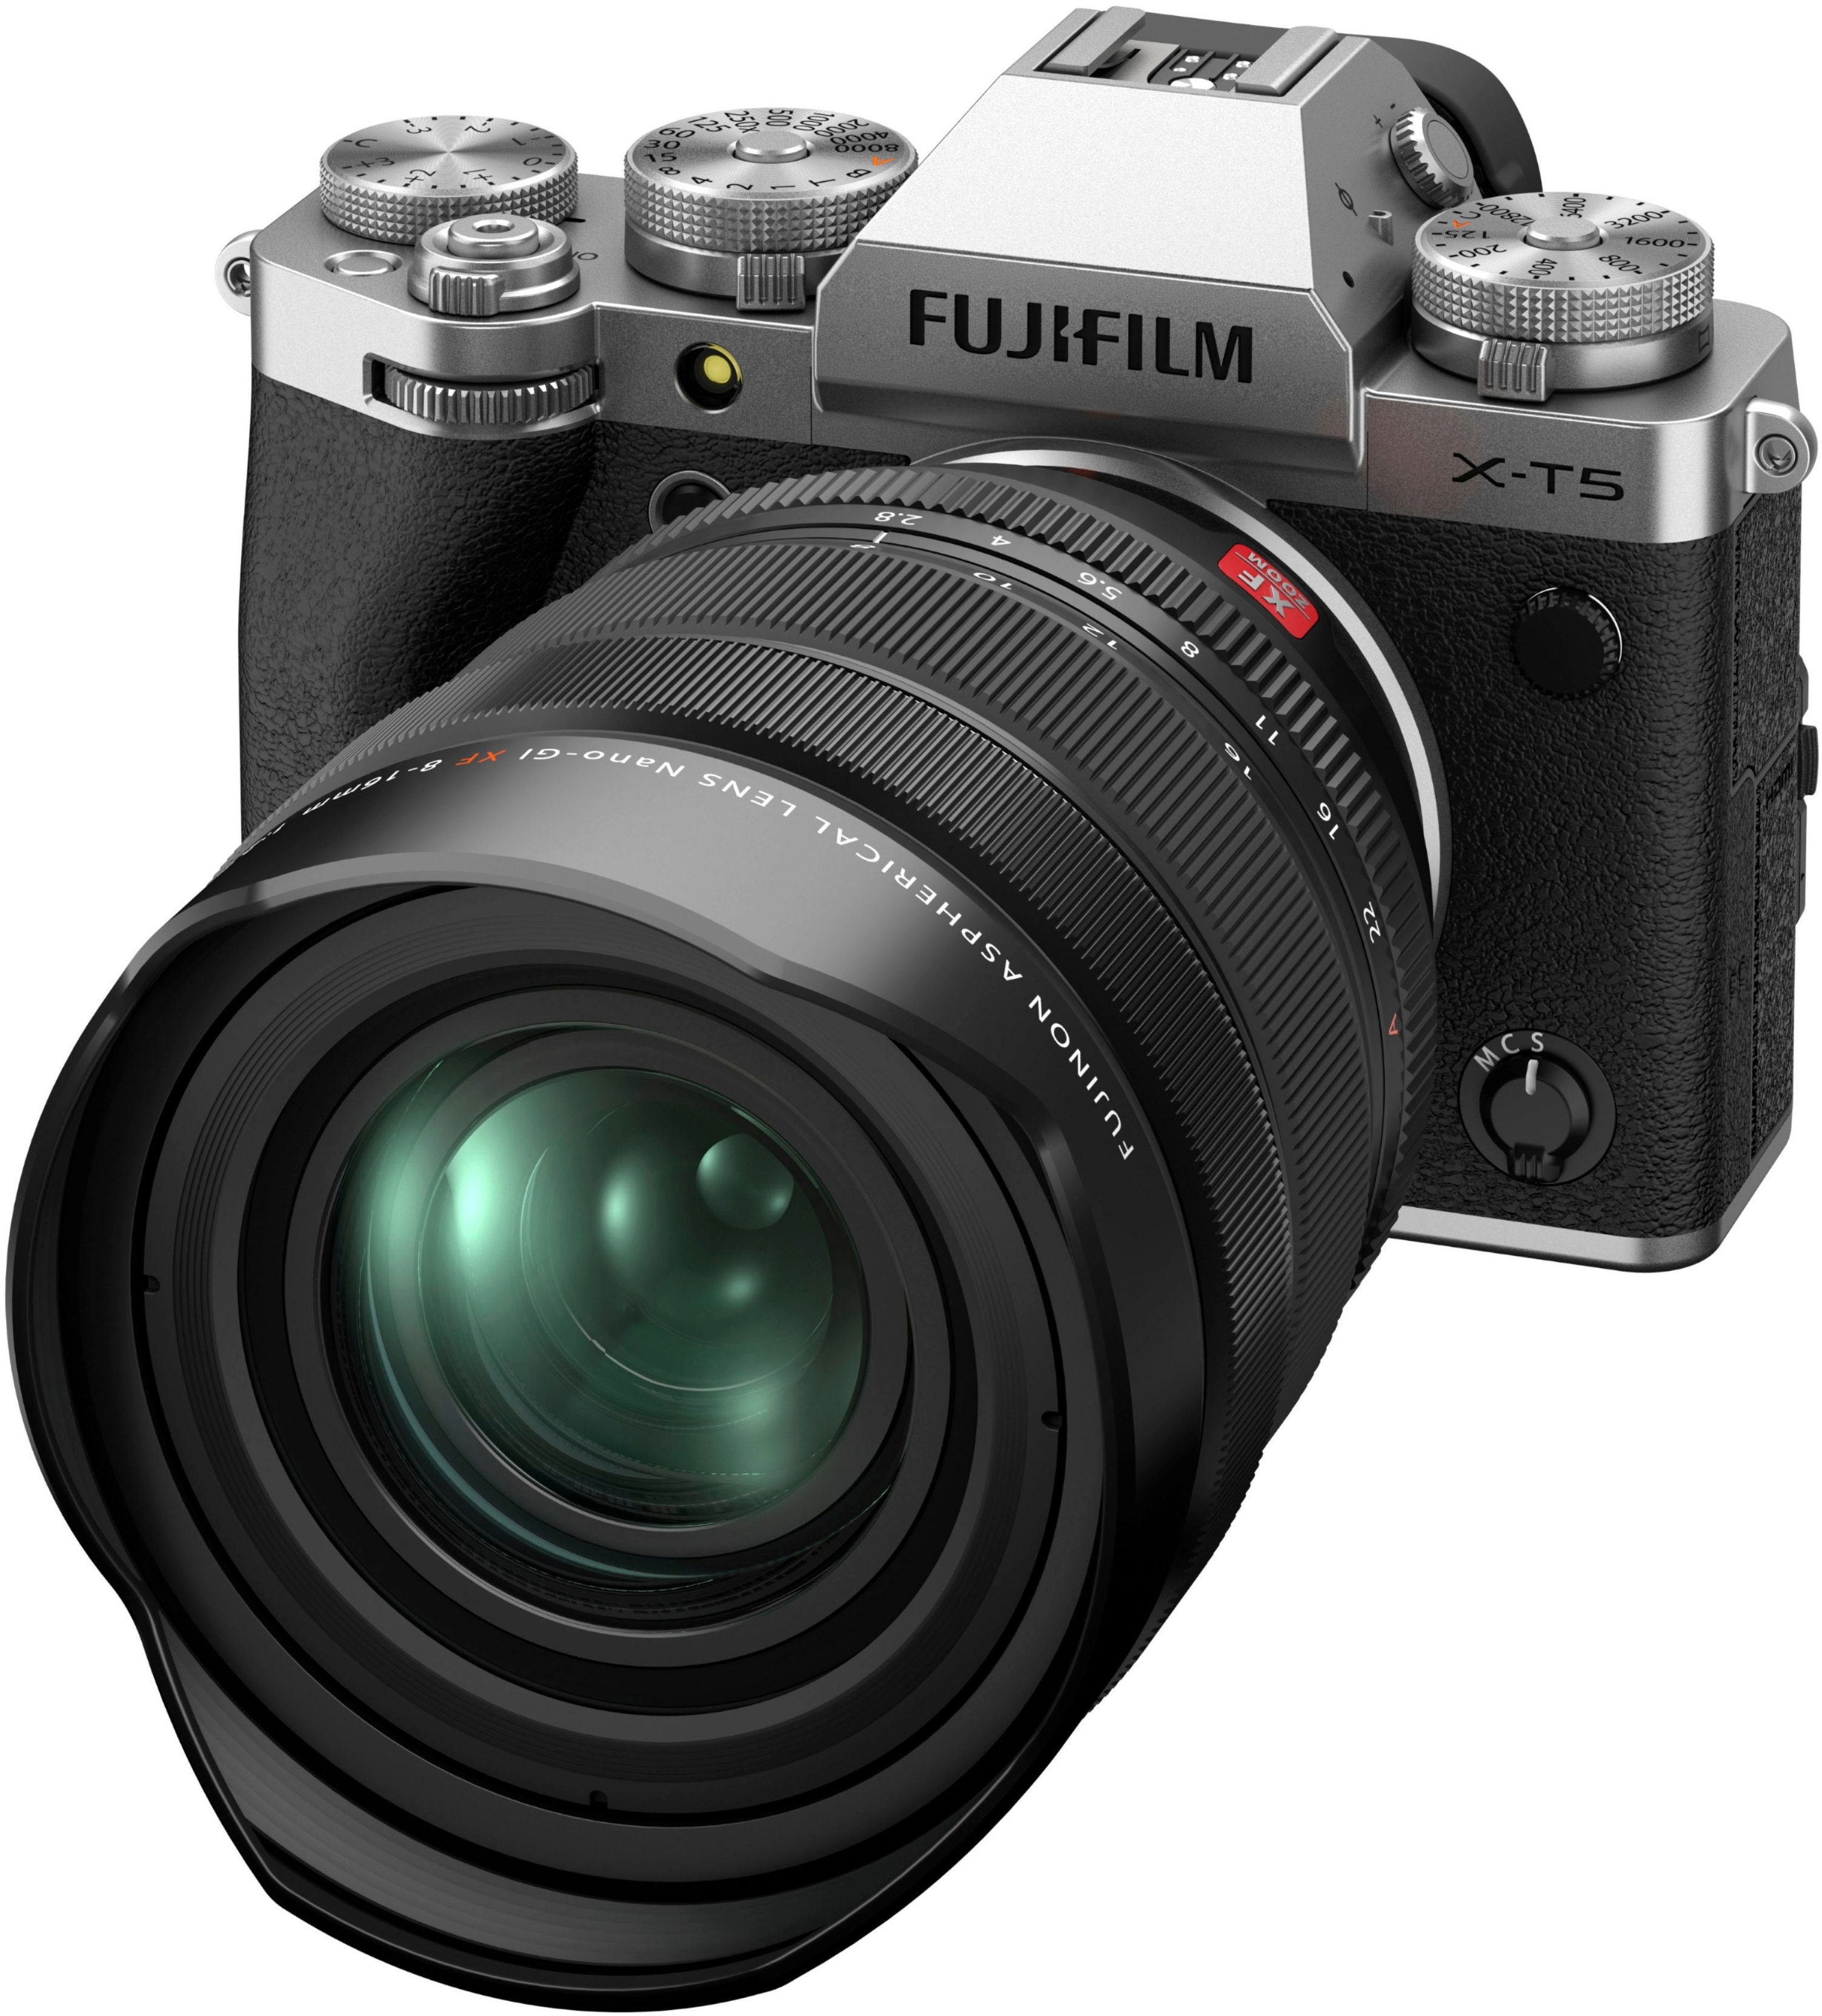 FUJIFILM X-T5 Mirrorless Camera with 18-55mm Lens 16783111 B&H